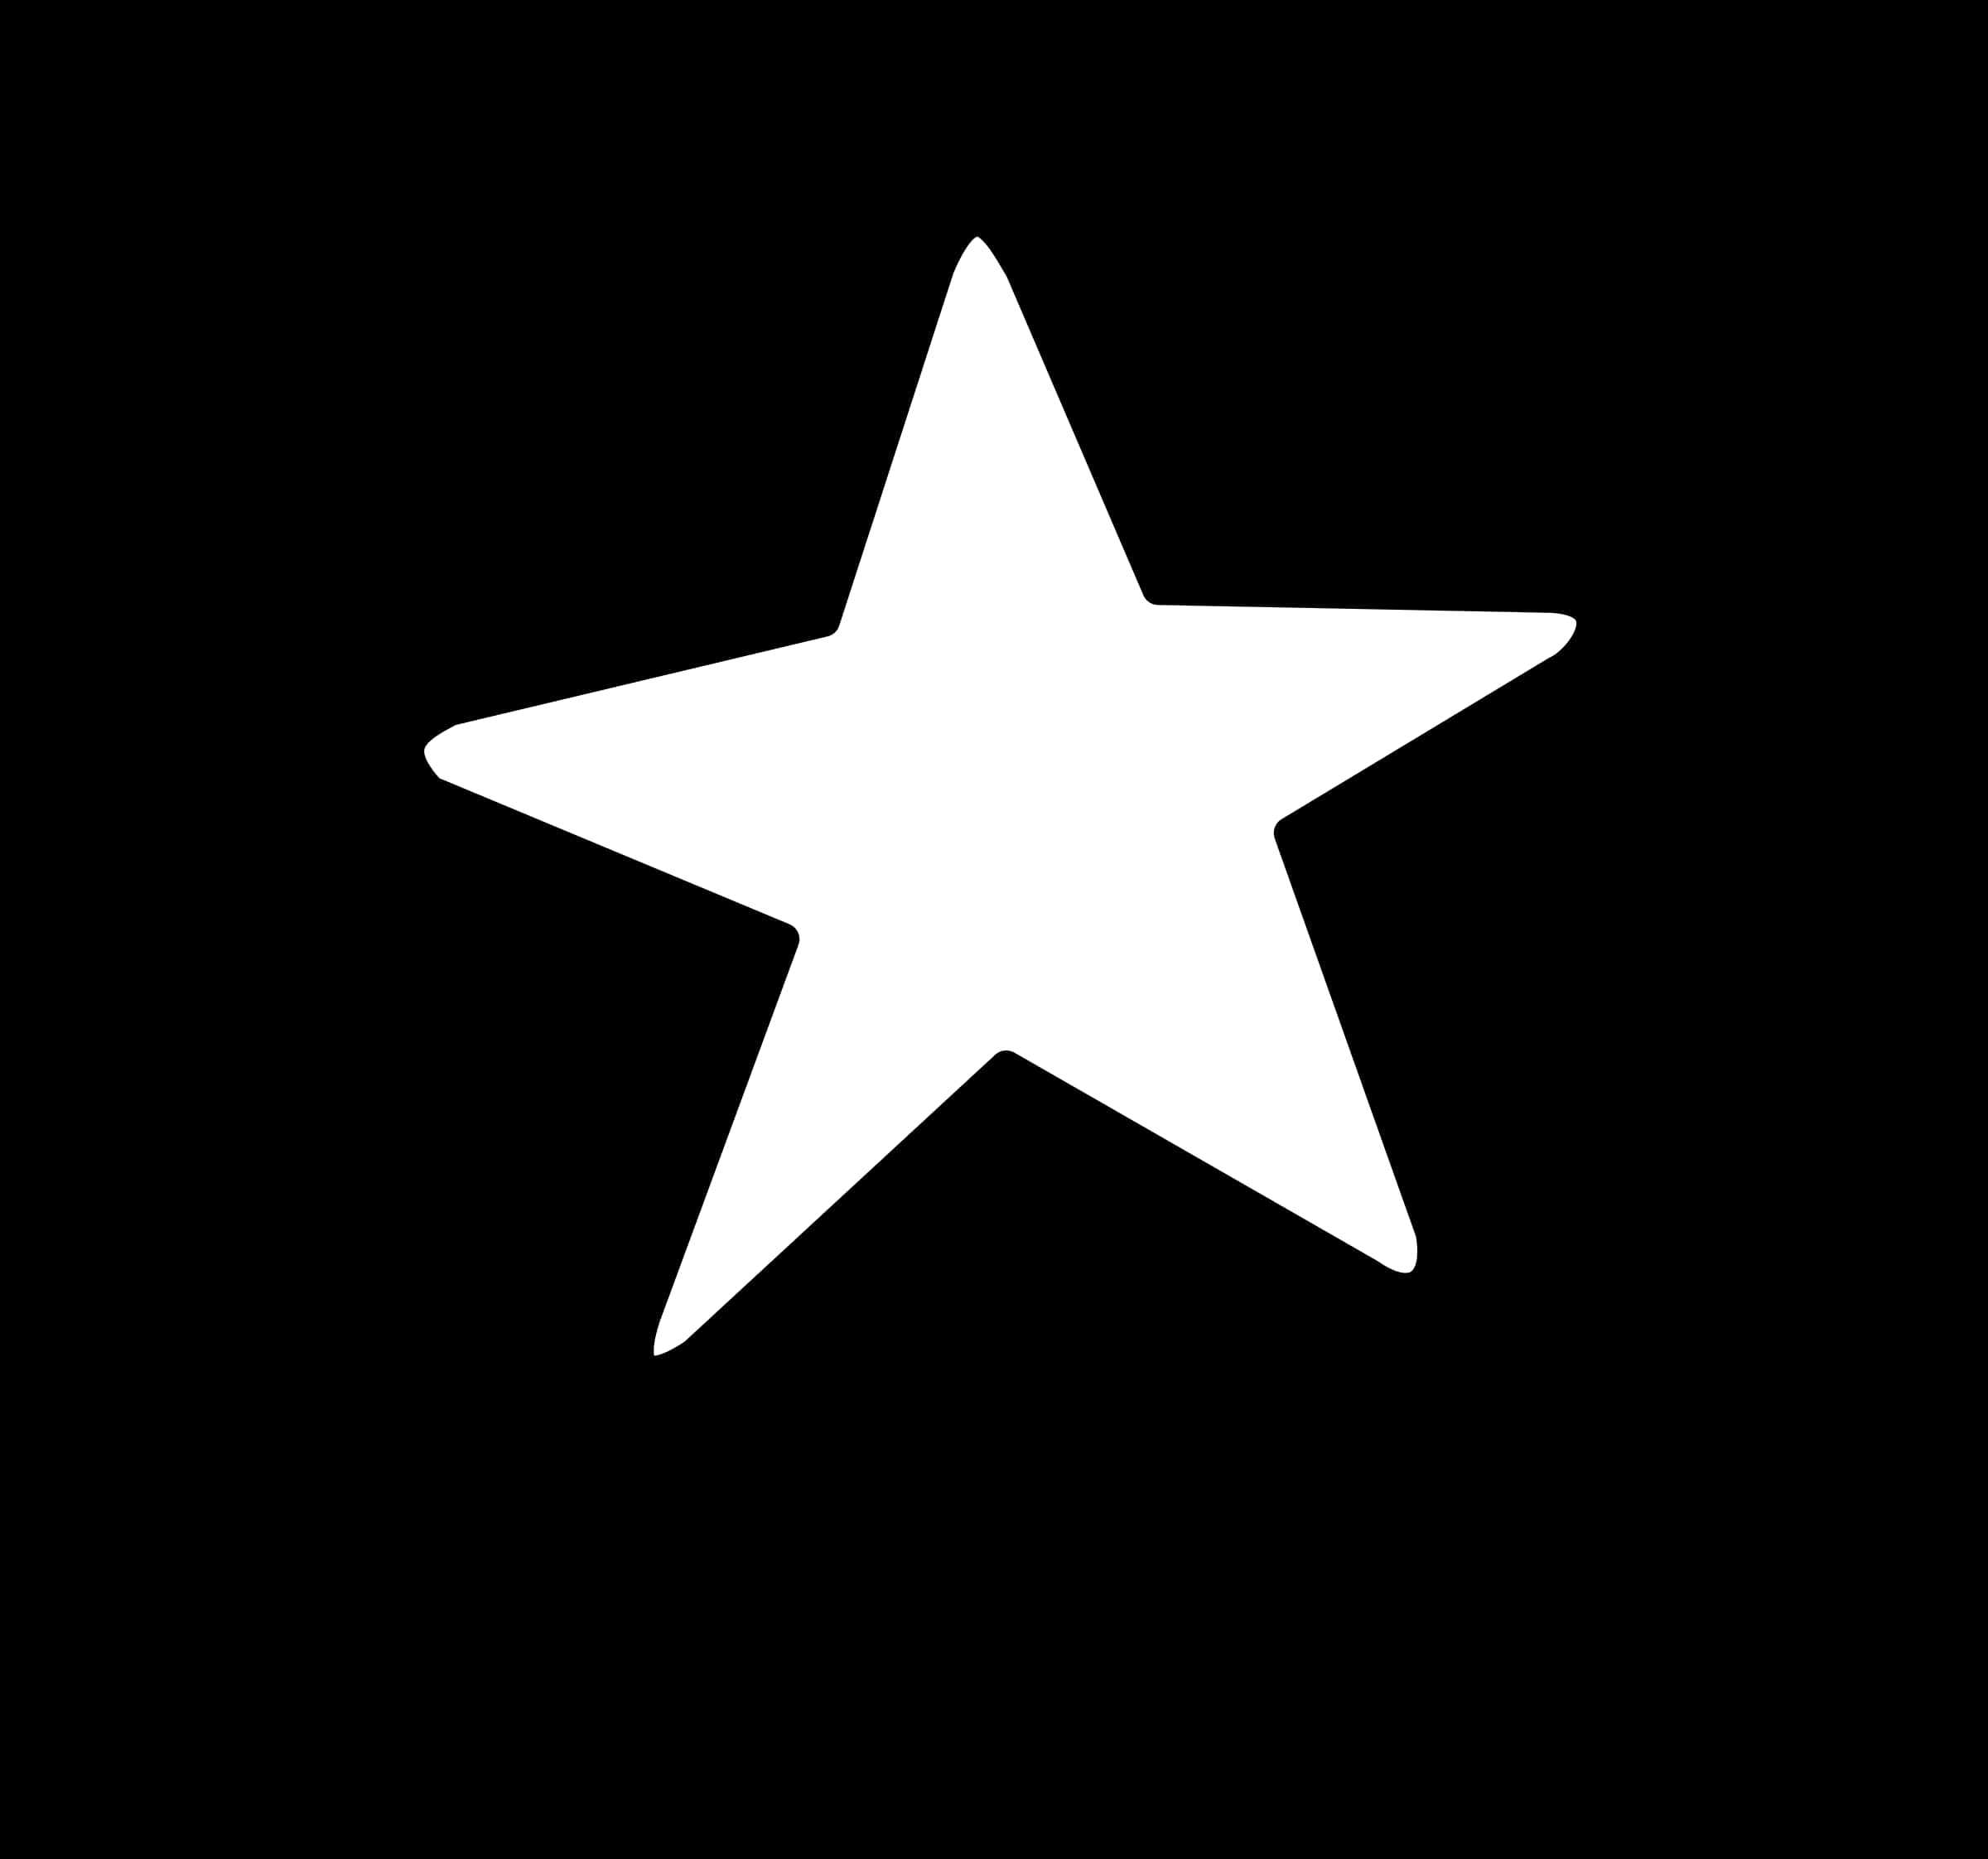 White Star Iconon Black Background PNG image